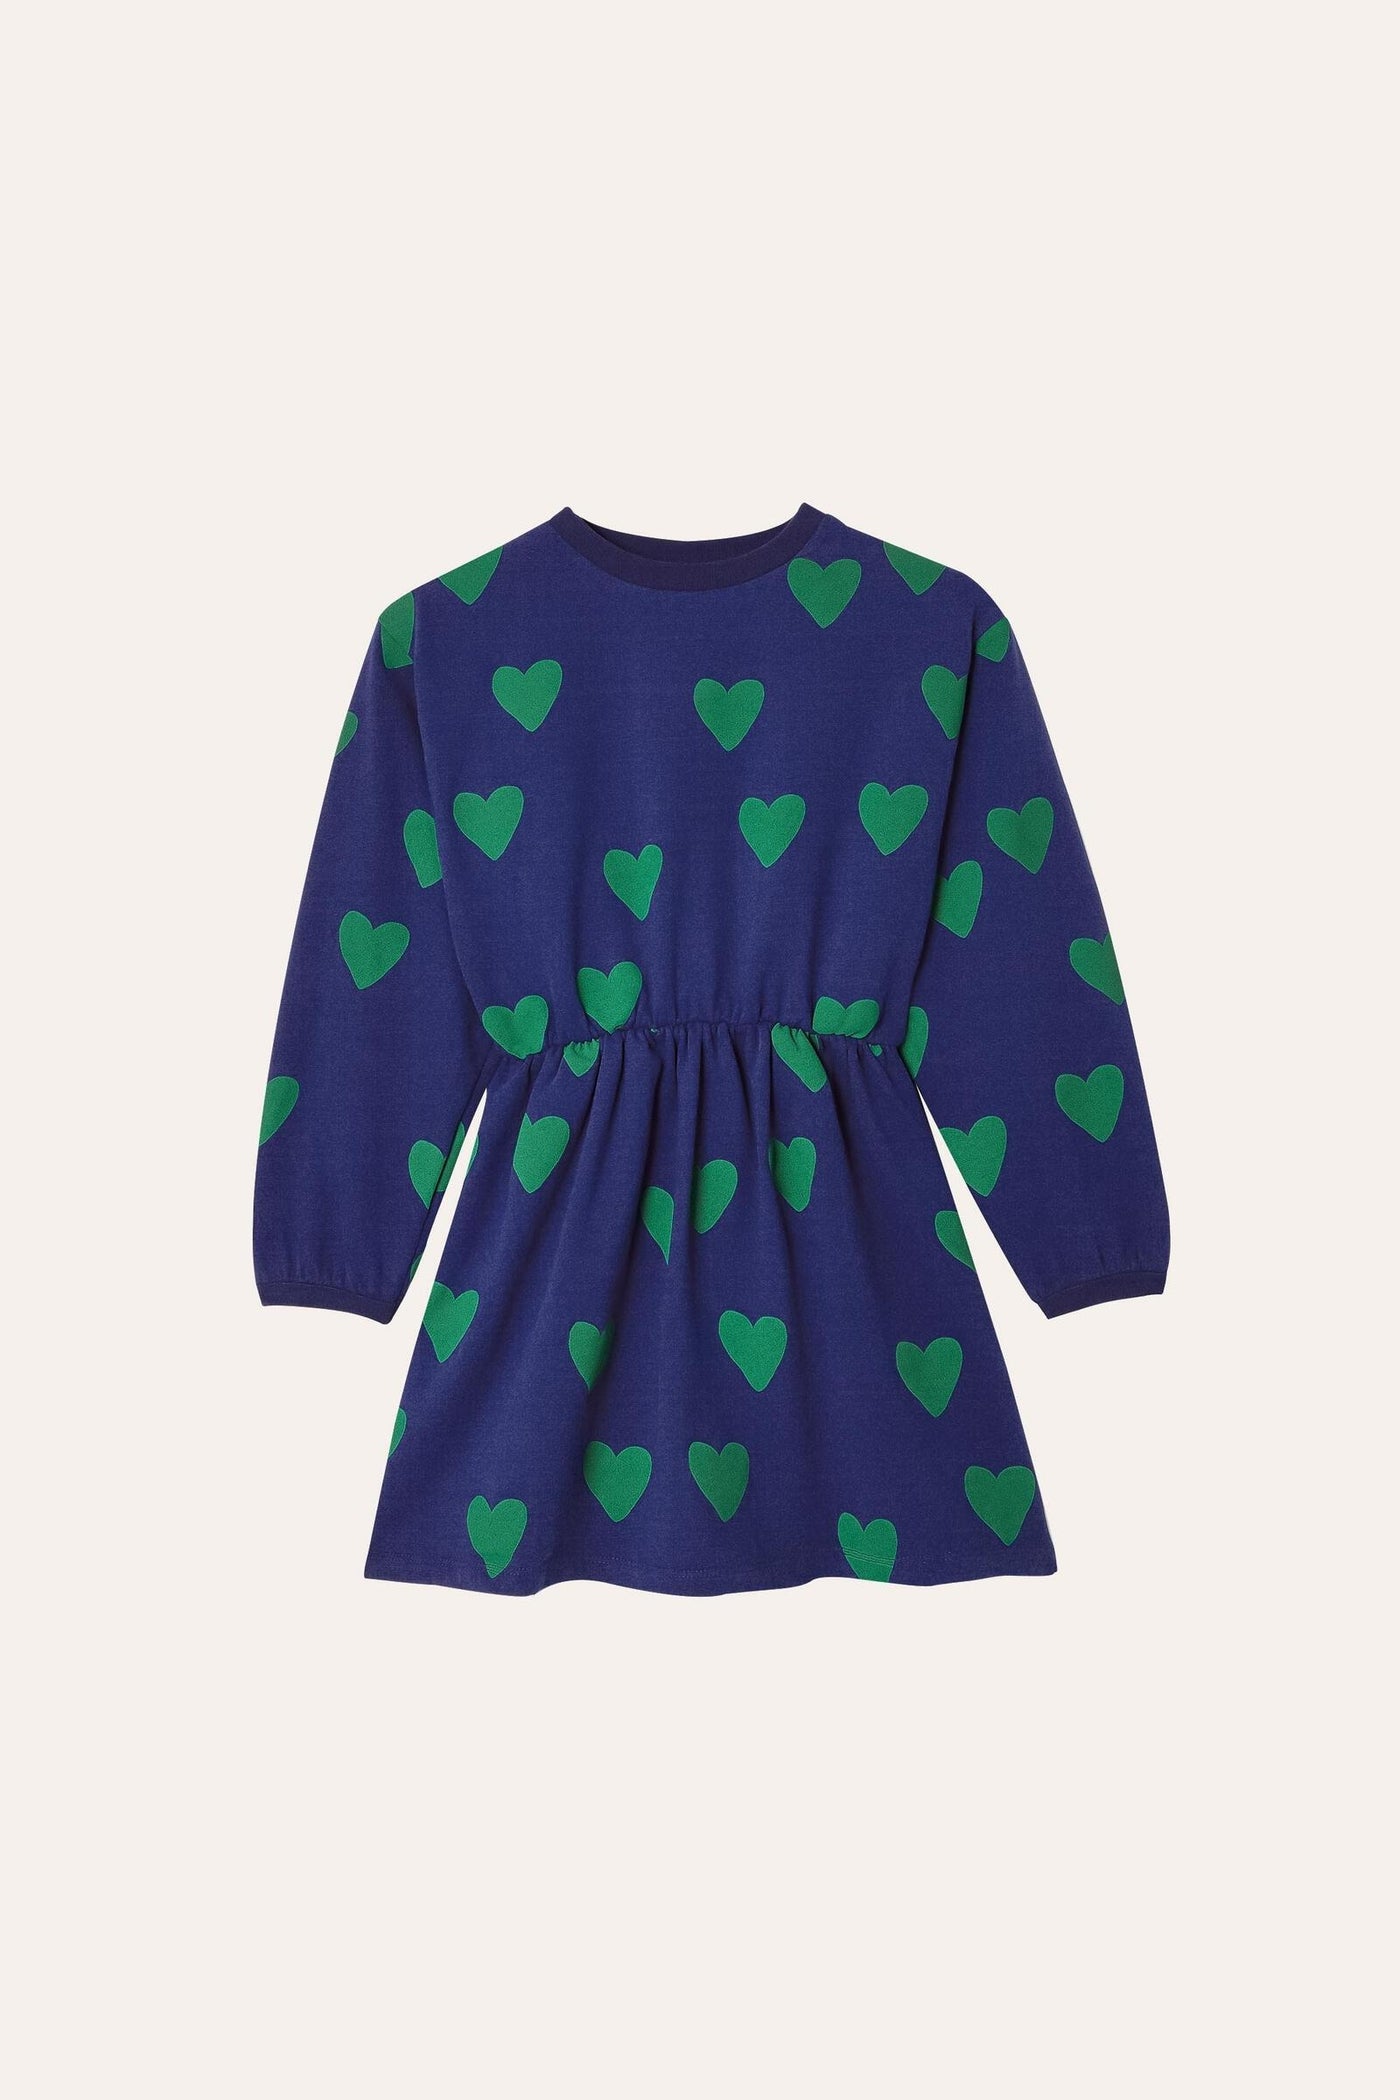 Green Hearts Long Sleeves Kids Dress